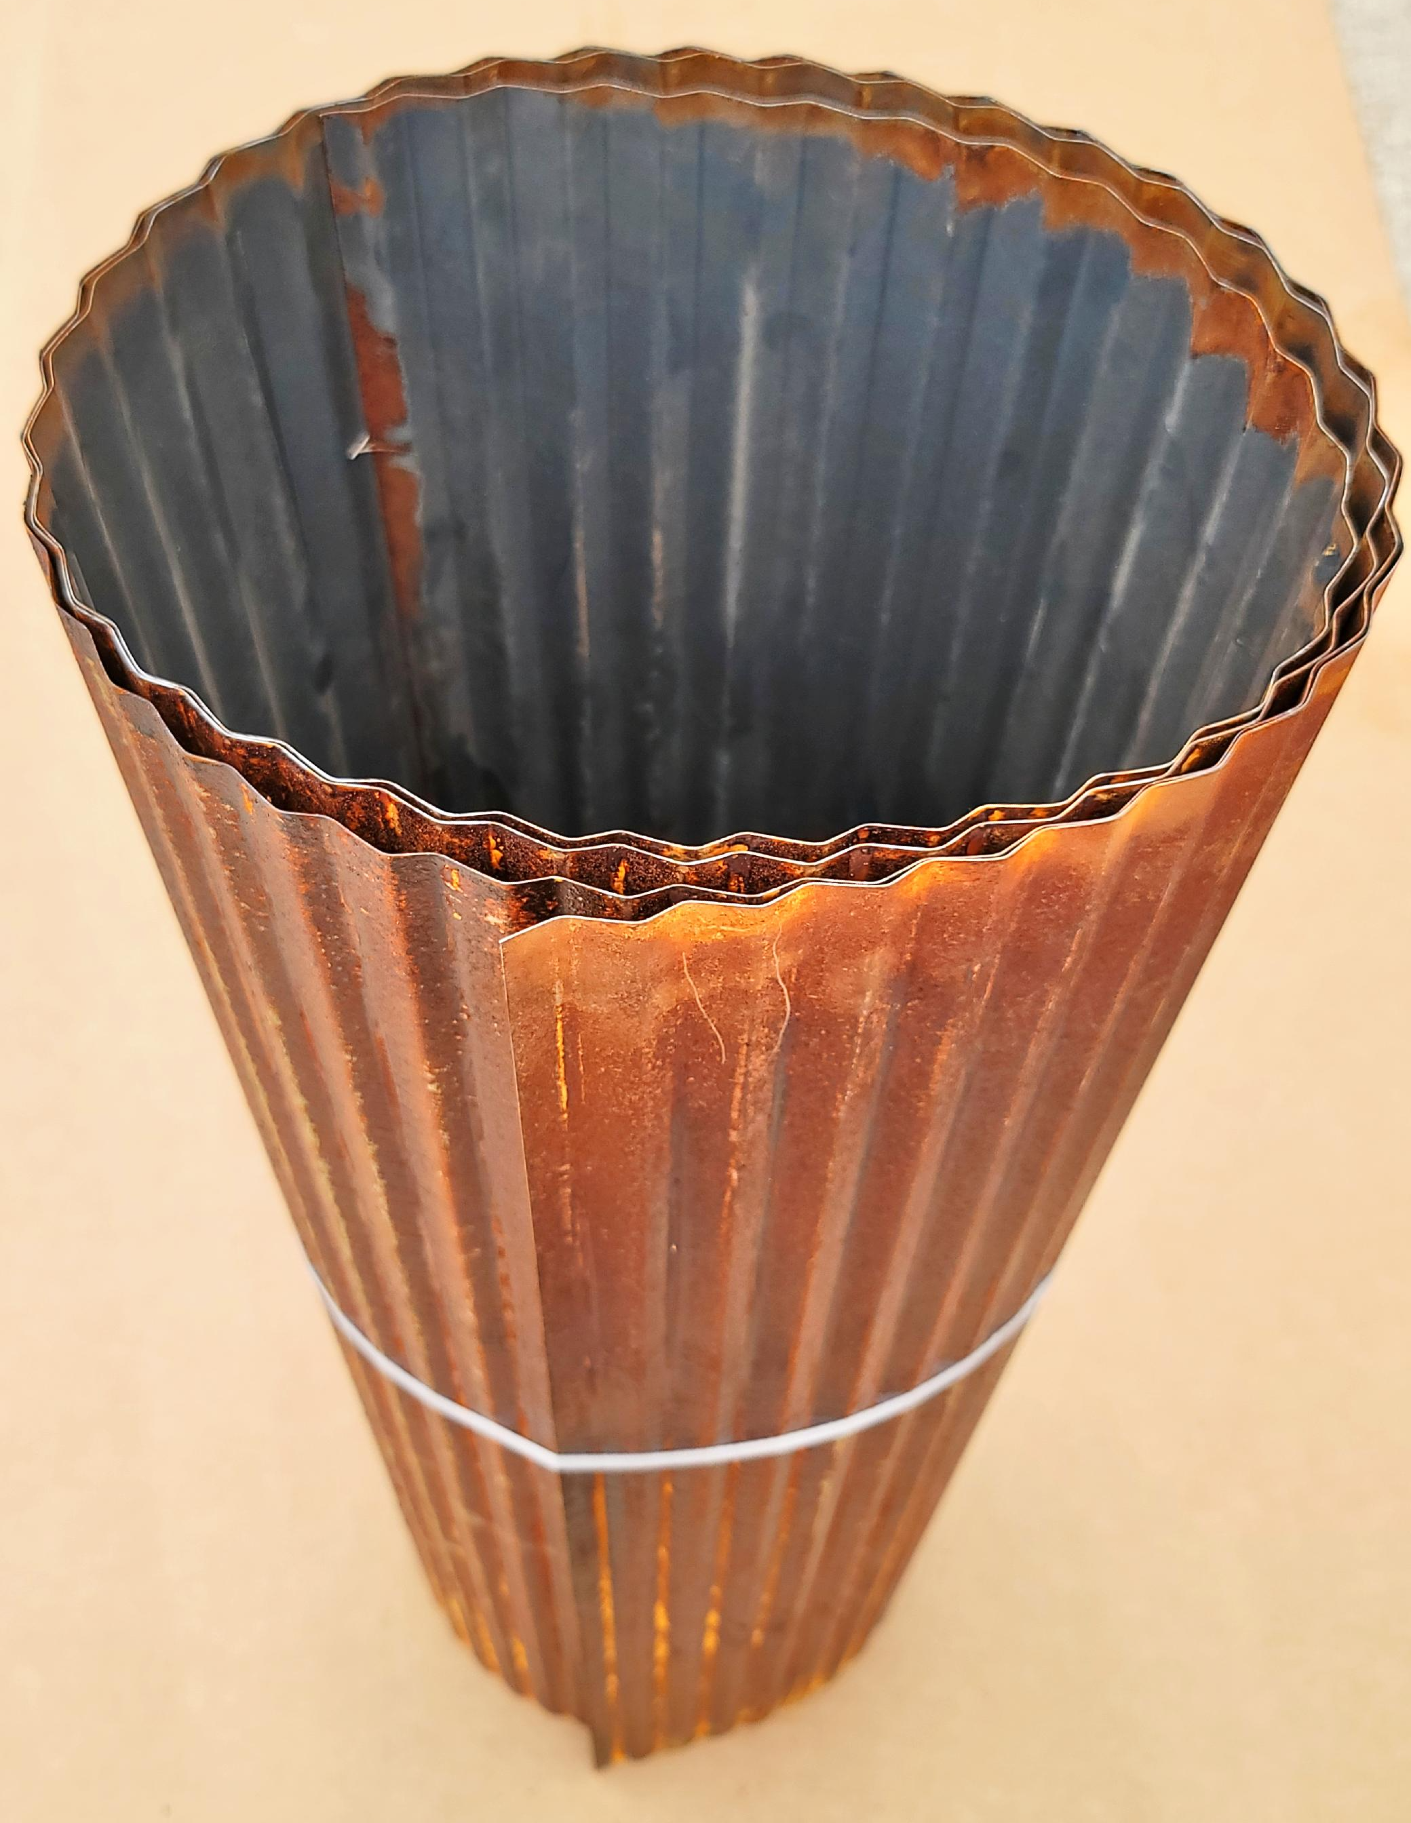 Colorado Corrugated Metal Wainscoting Rolls